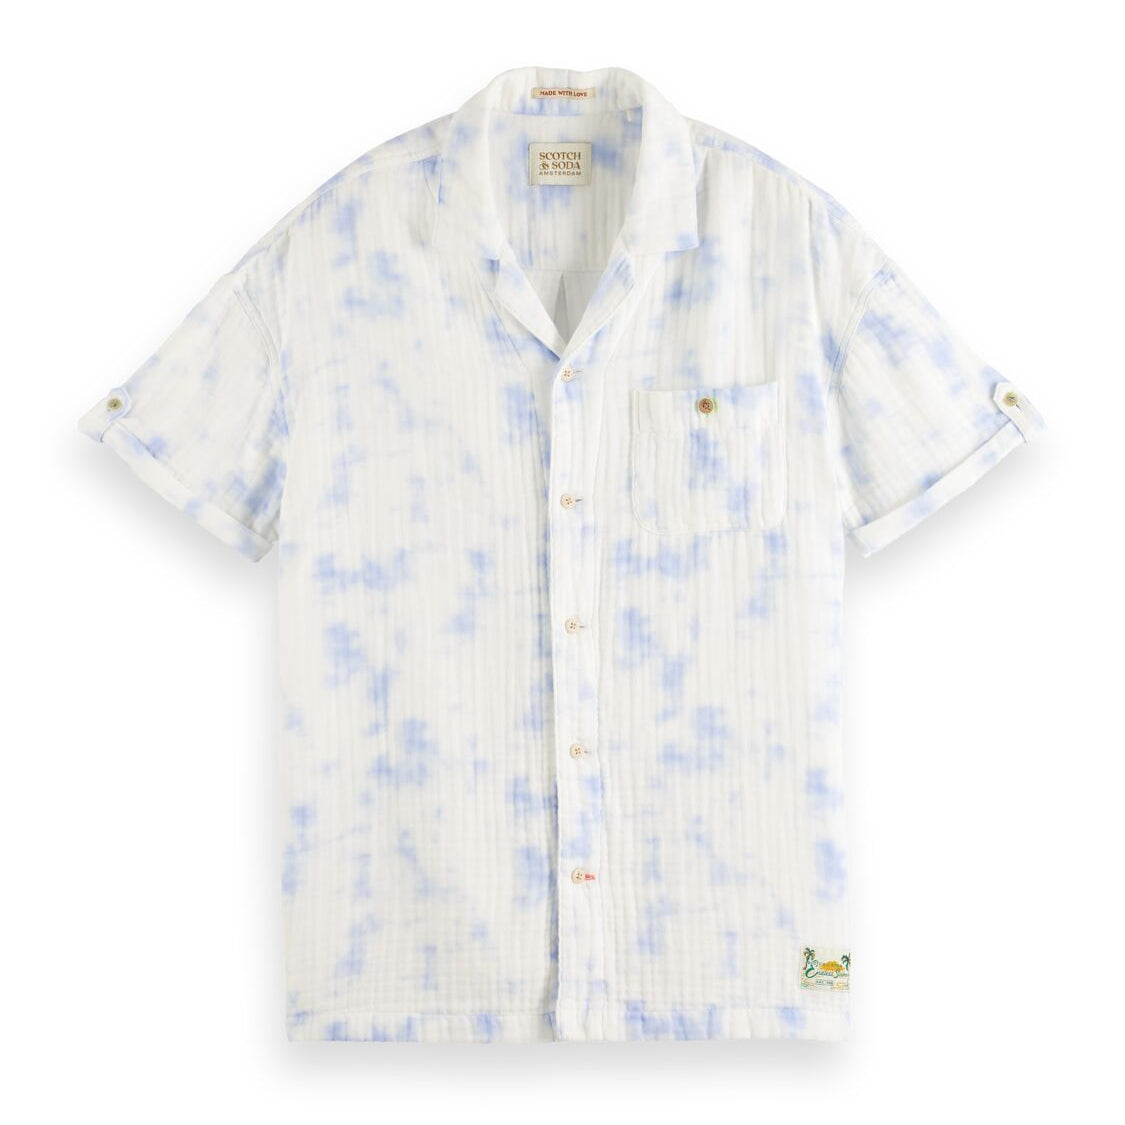 Scotch & Soda Short Sleeve Bonded Printed Shirt - Off White - 1 - Tops - Shirts (Short Sleeve)